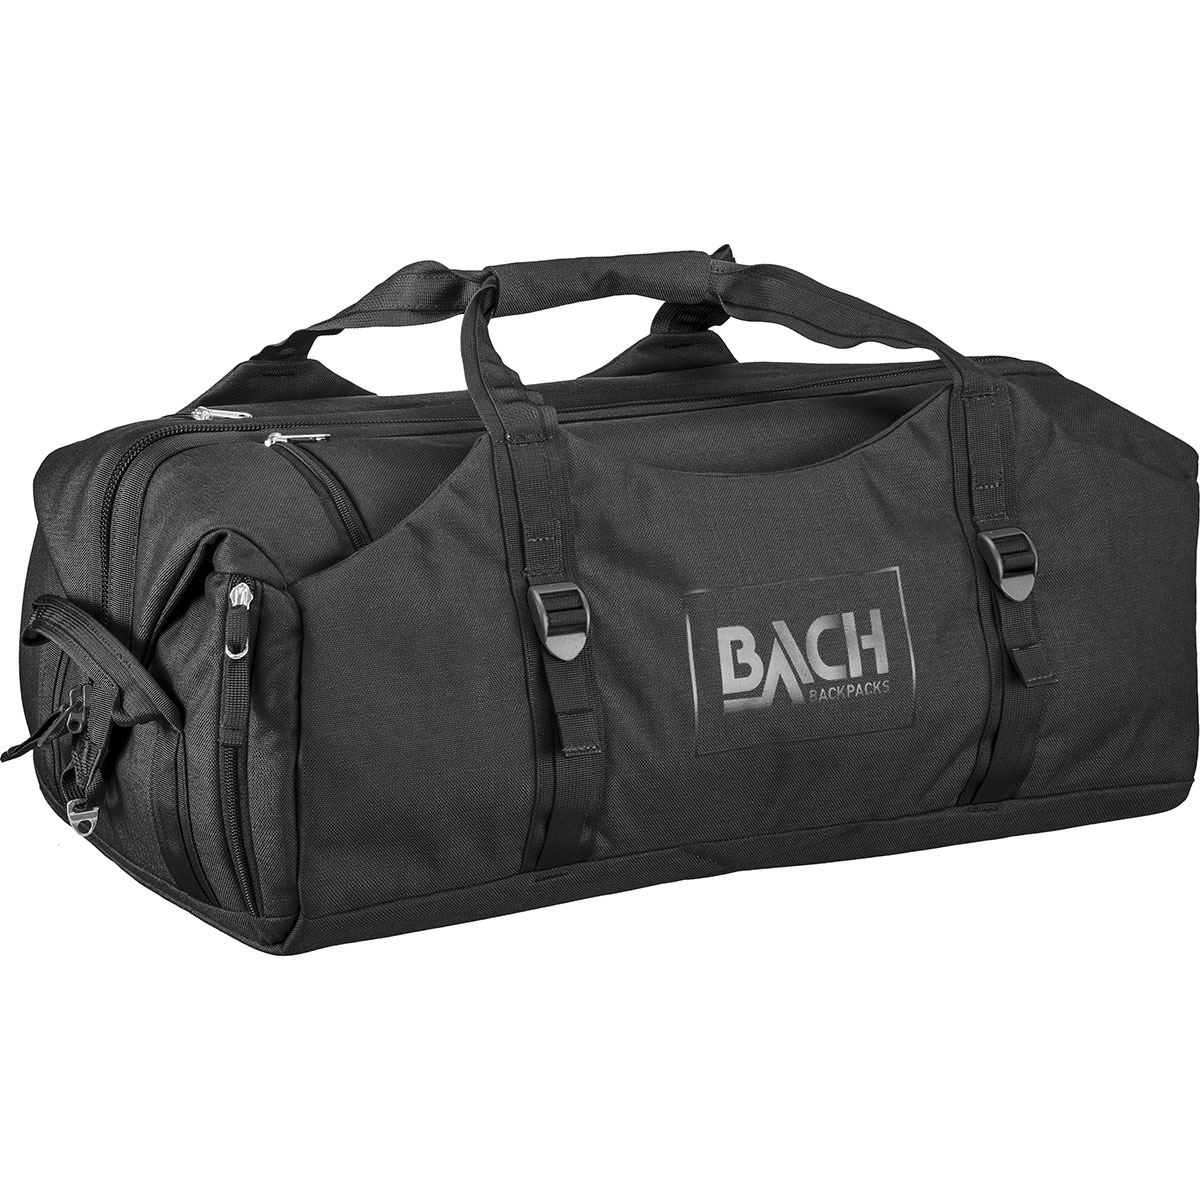 Bach Equipment Dr. Duffel 40 Reisetasche von Bach Equipment